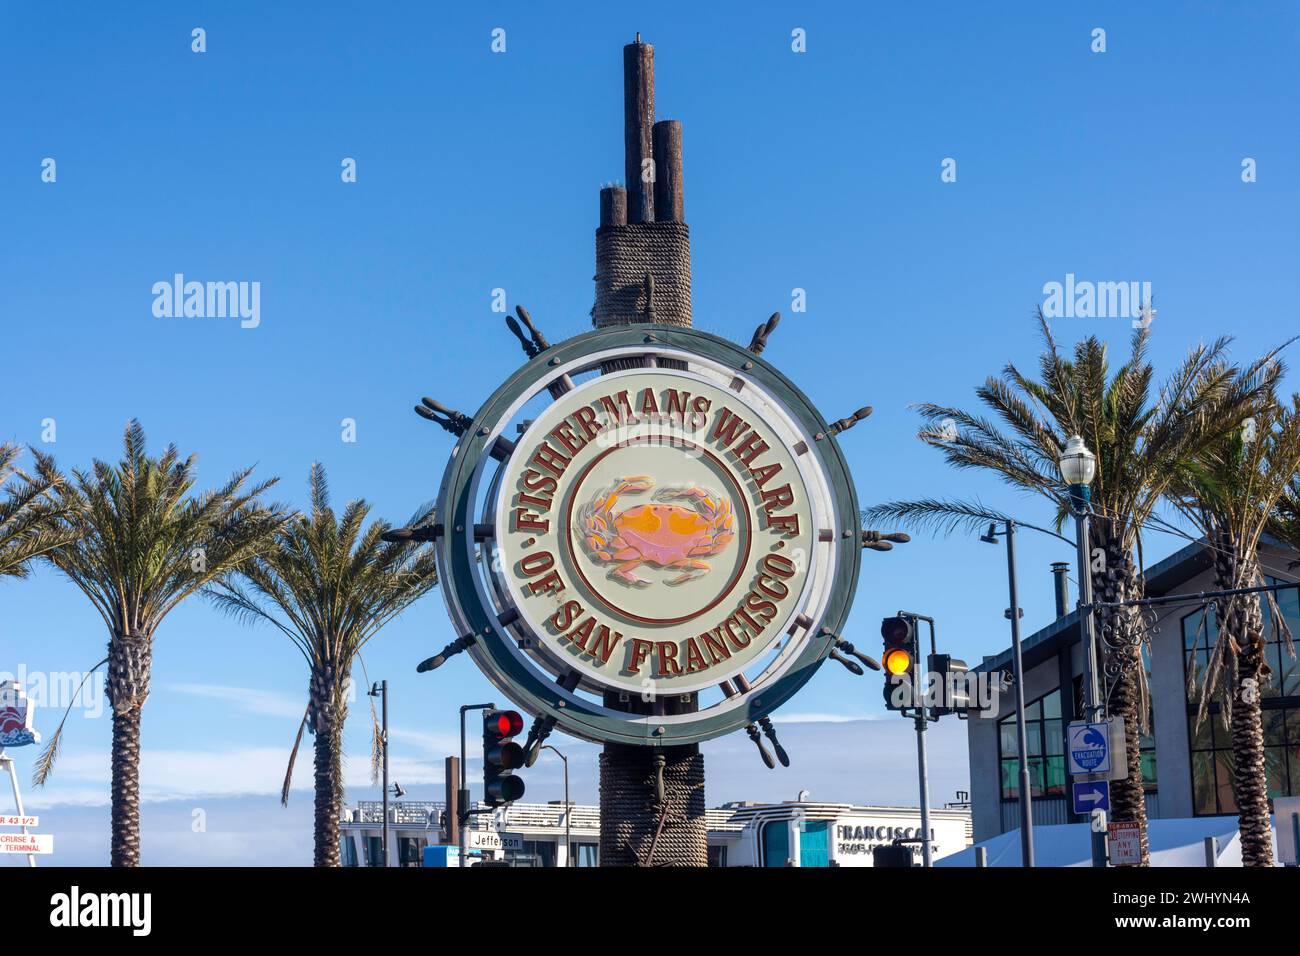 Entrance sign, Fisherman's Wharf, Fisherman's Wharf District, San Francisco, California, United States Stock Photo